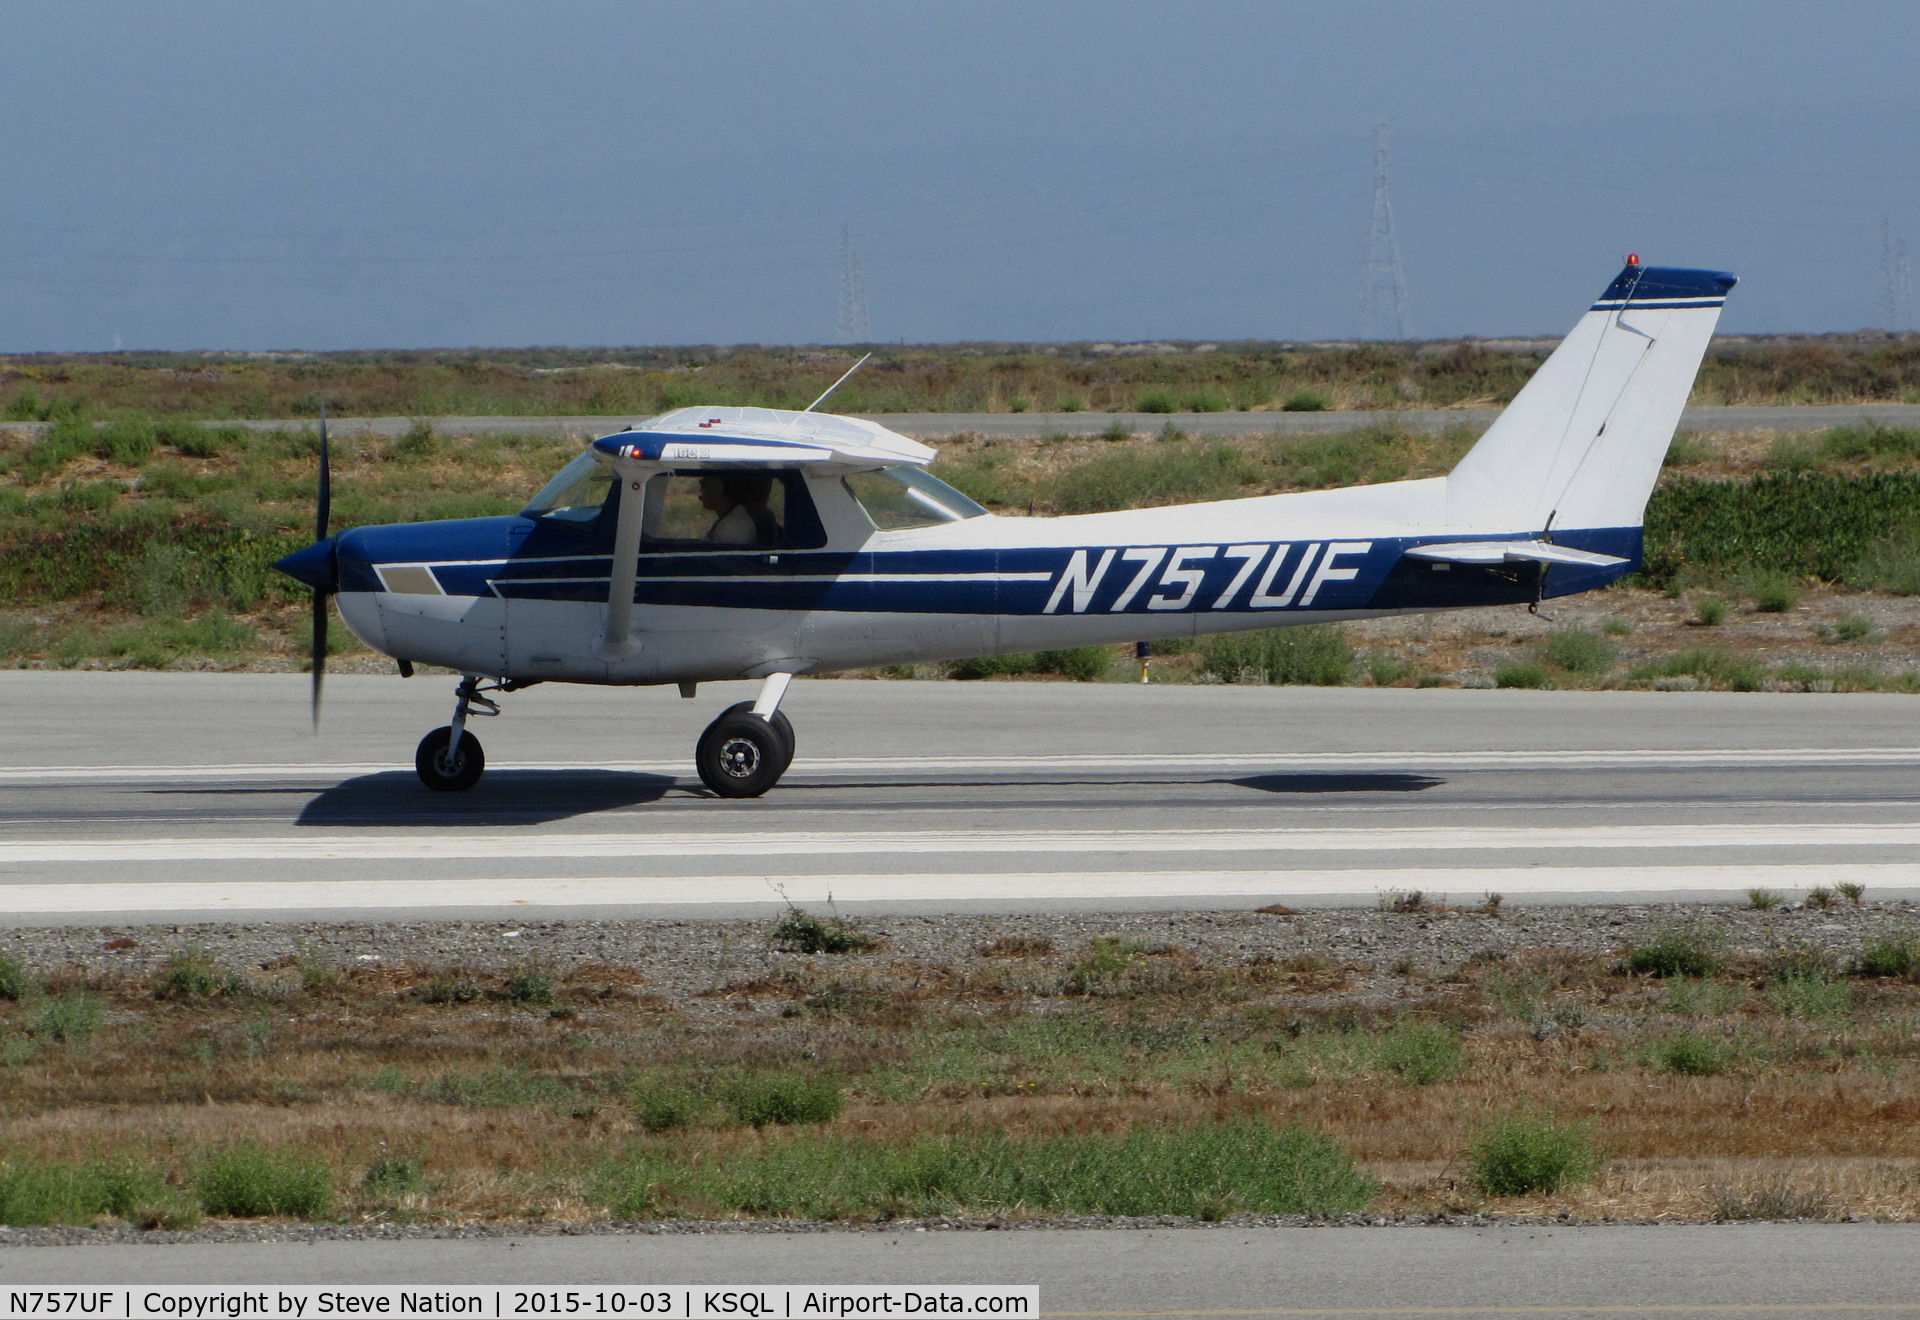 N757UF, 1977 Cessna 152 C/N 15280009, 1977 Cessna 152 rolling on takeoff @ San Carlos Airport, CA